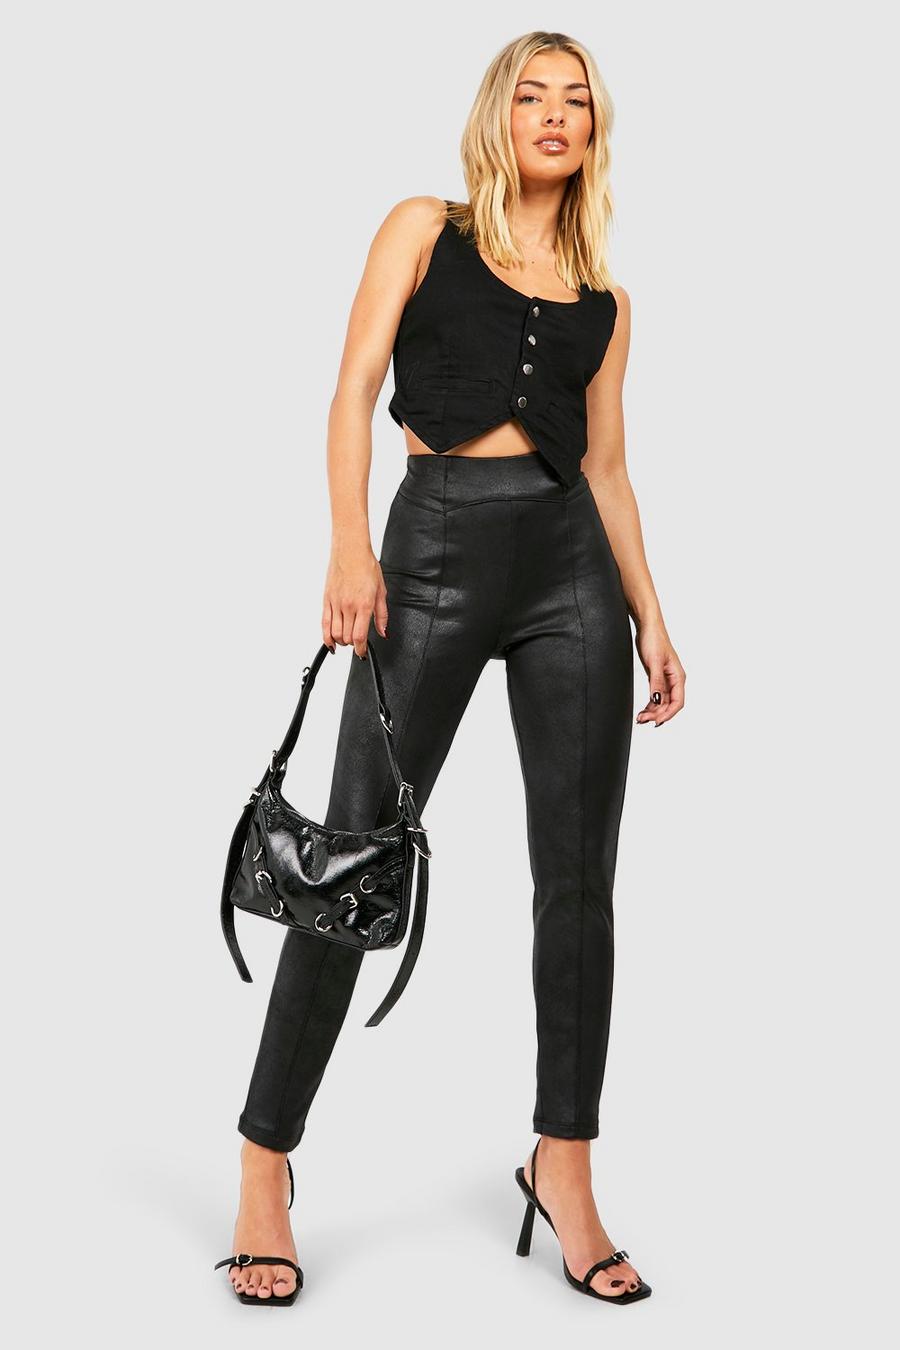 https://media.boohoo.com/i/boohoo/gzz70950_black_xl/female-black-faux-leather-body-contour-leggings/?w=900&qlt=default&fmt.jp2.qlt=70&fmt=auto&sm=fit